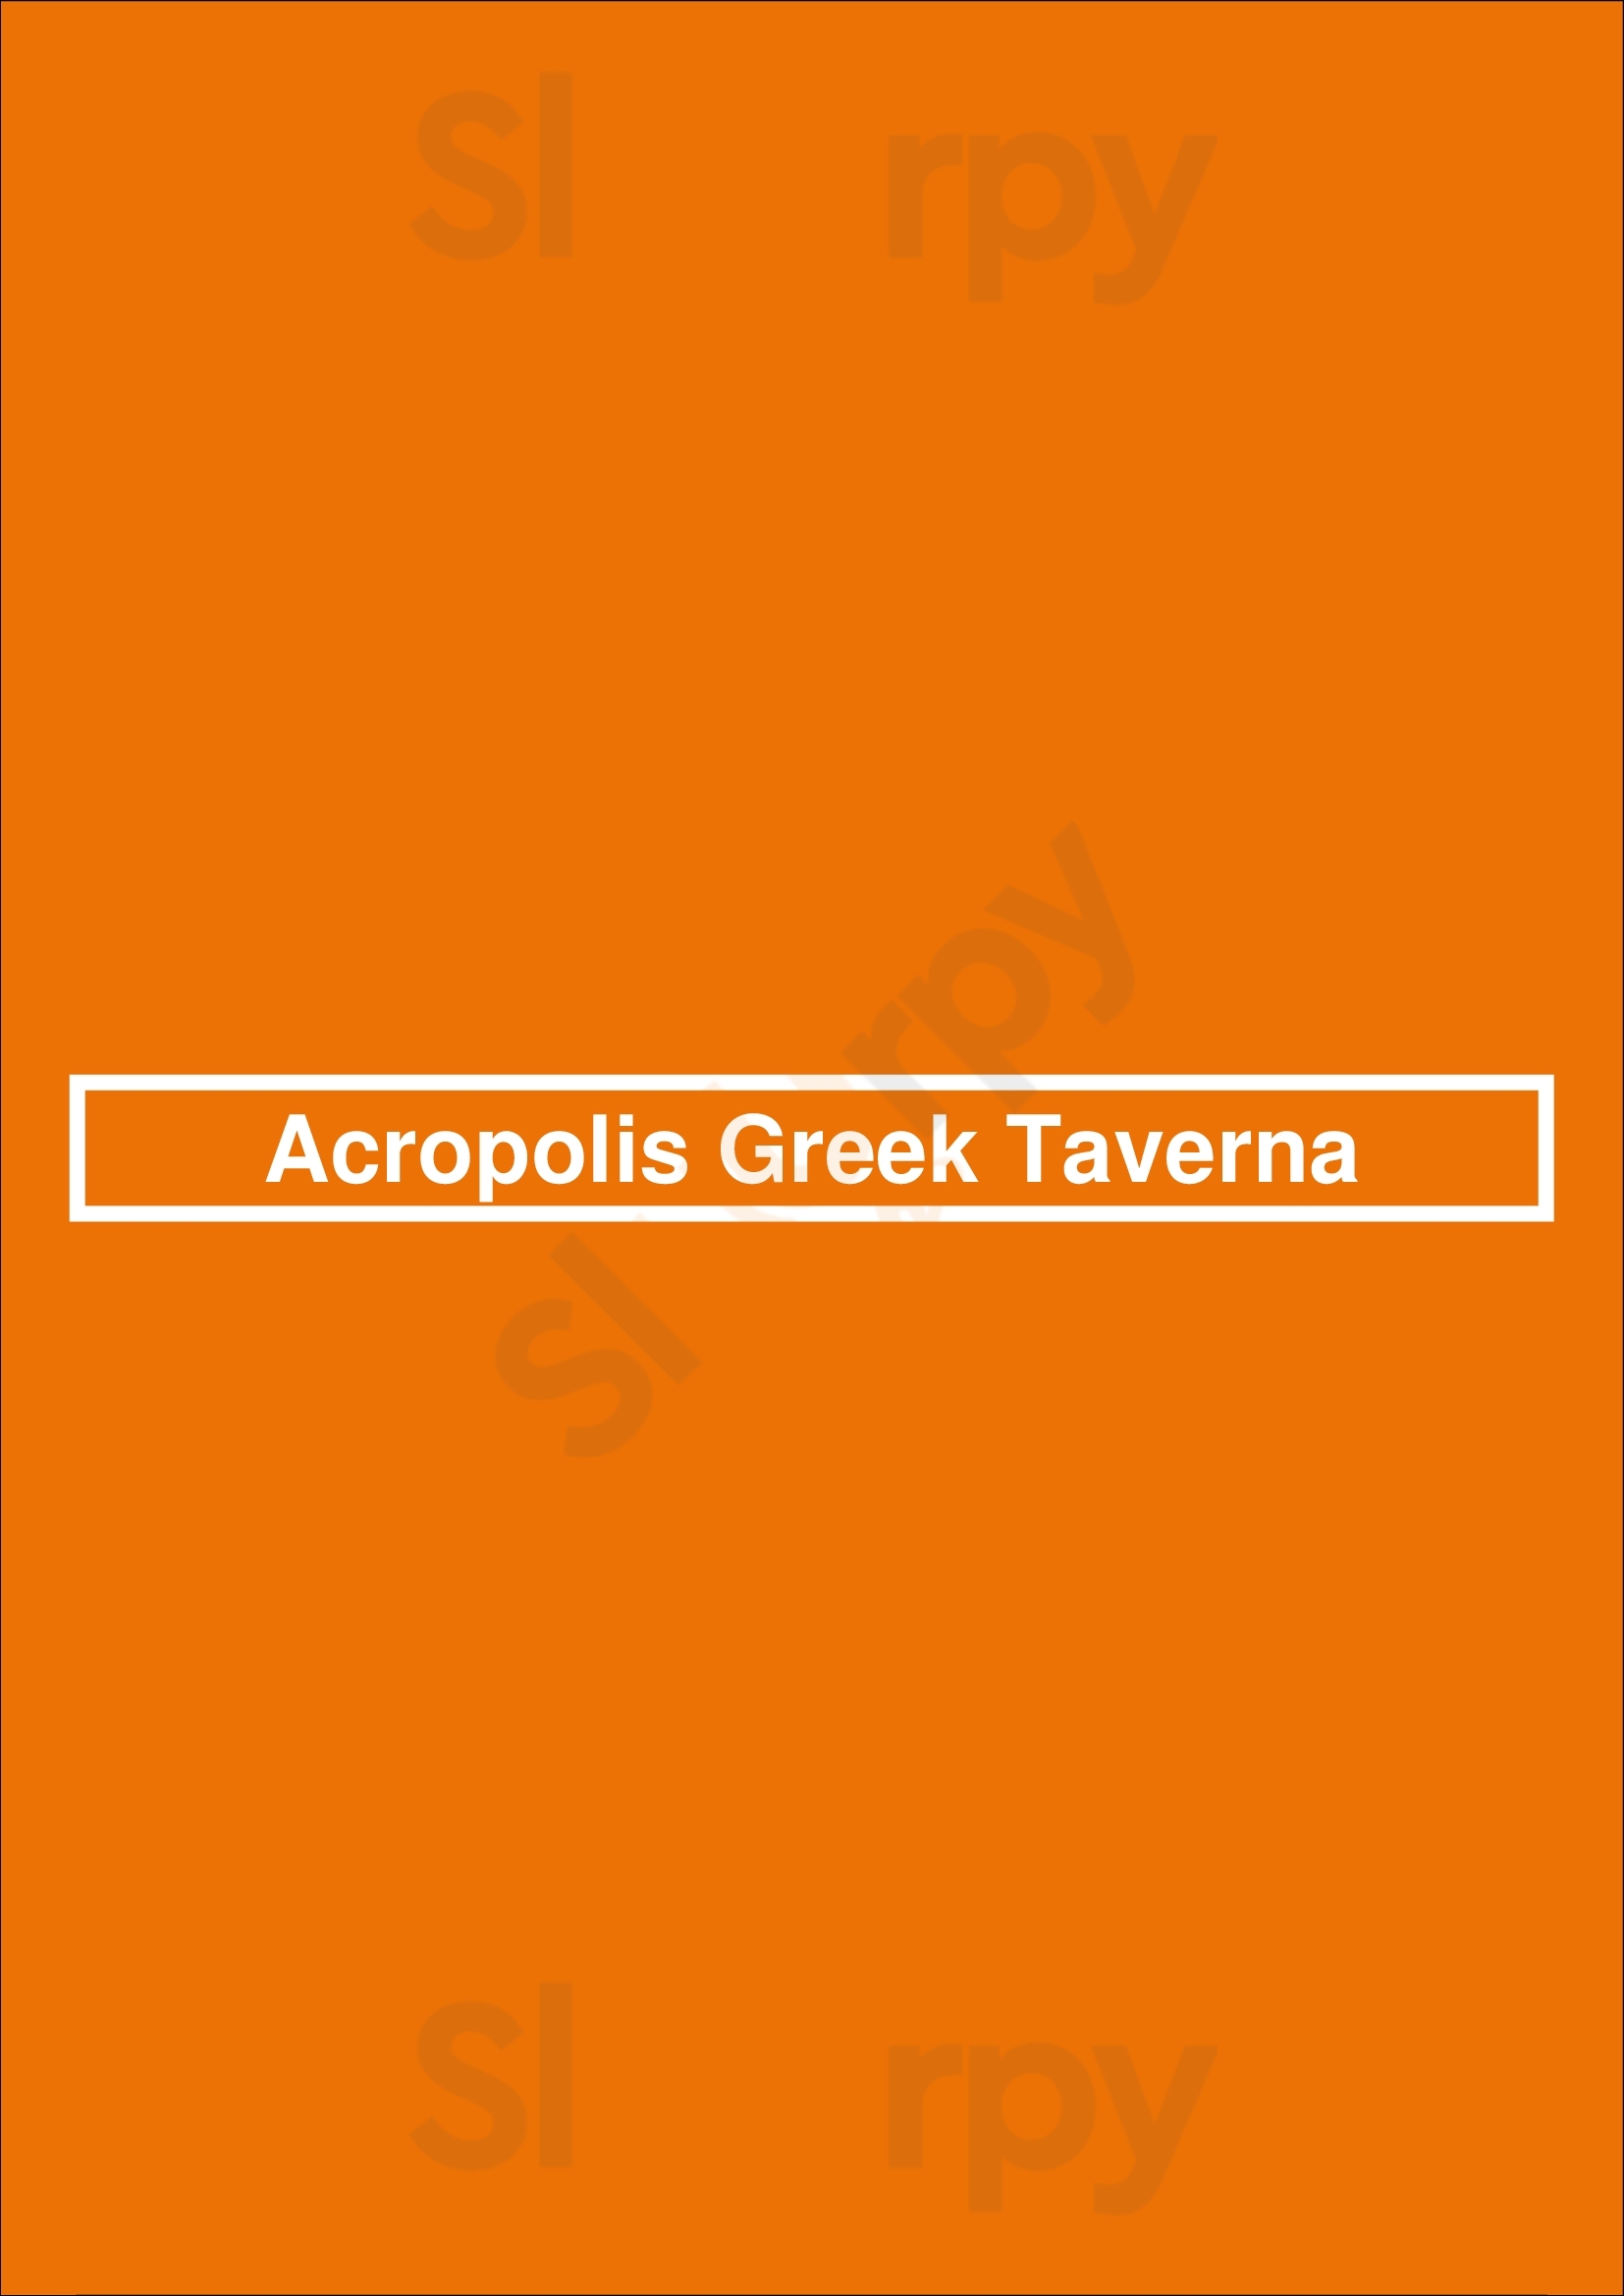 Acropolis Greek Taverna St. Petersburg Menu - 1